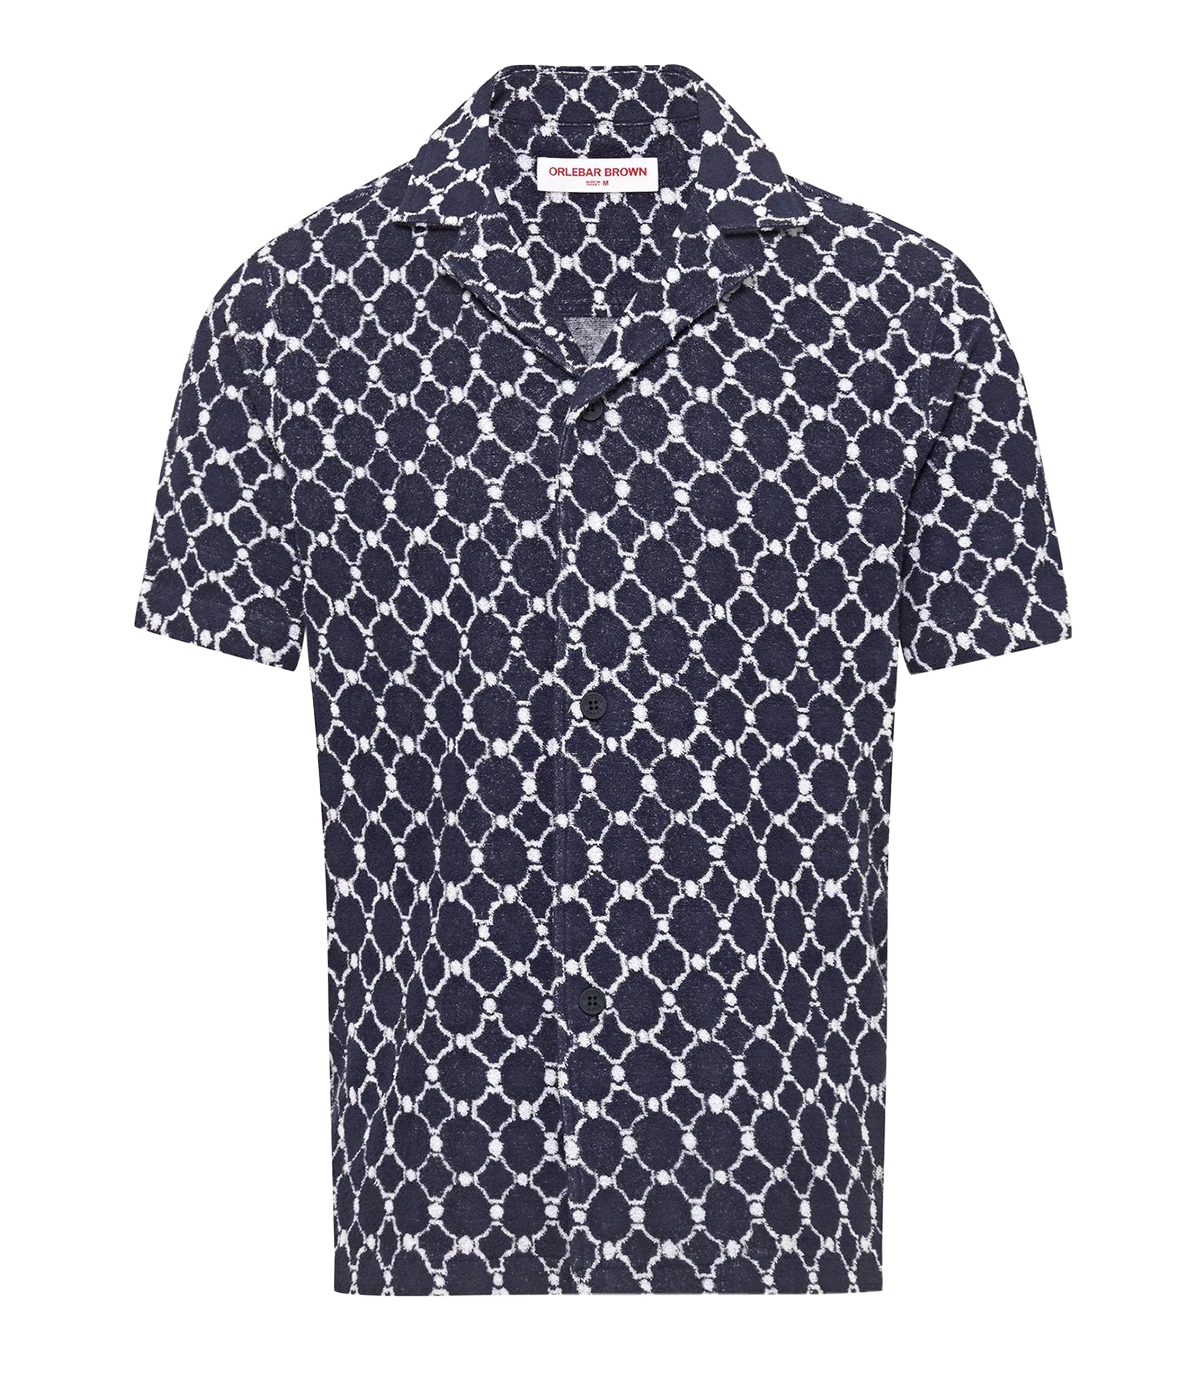 Howell Geo Knit Shirt in Midnight Navy